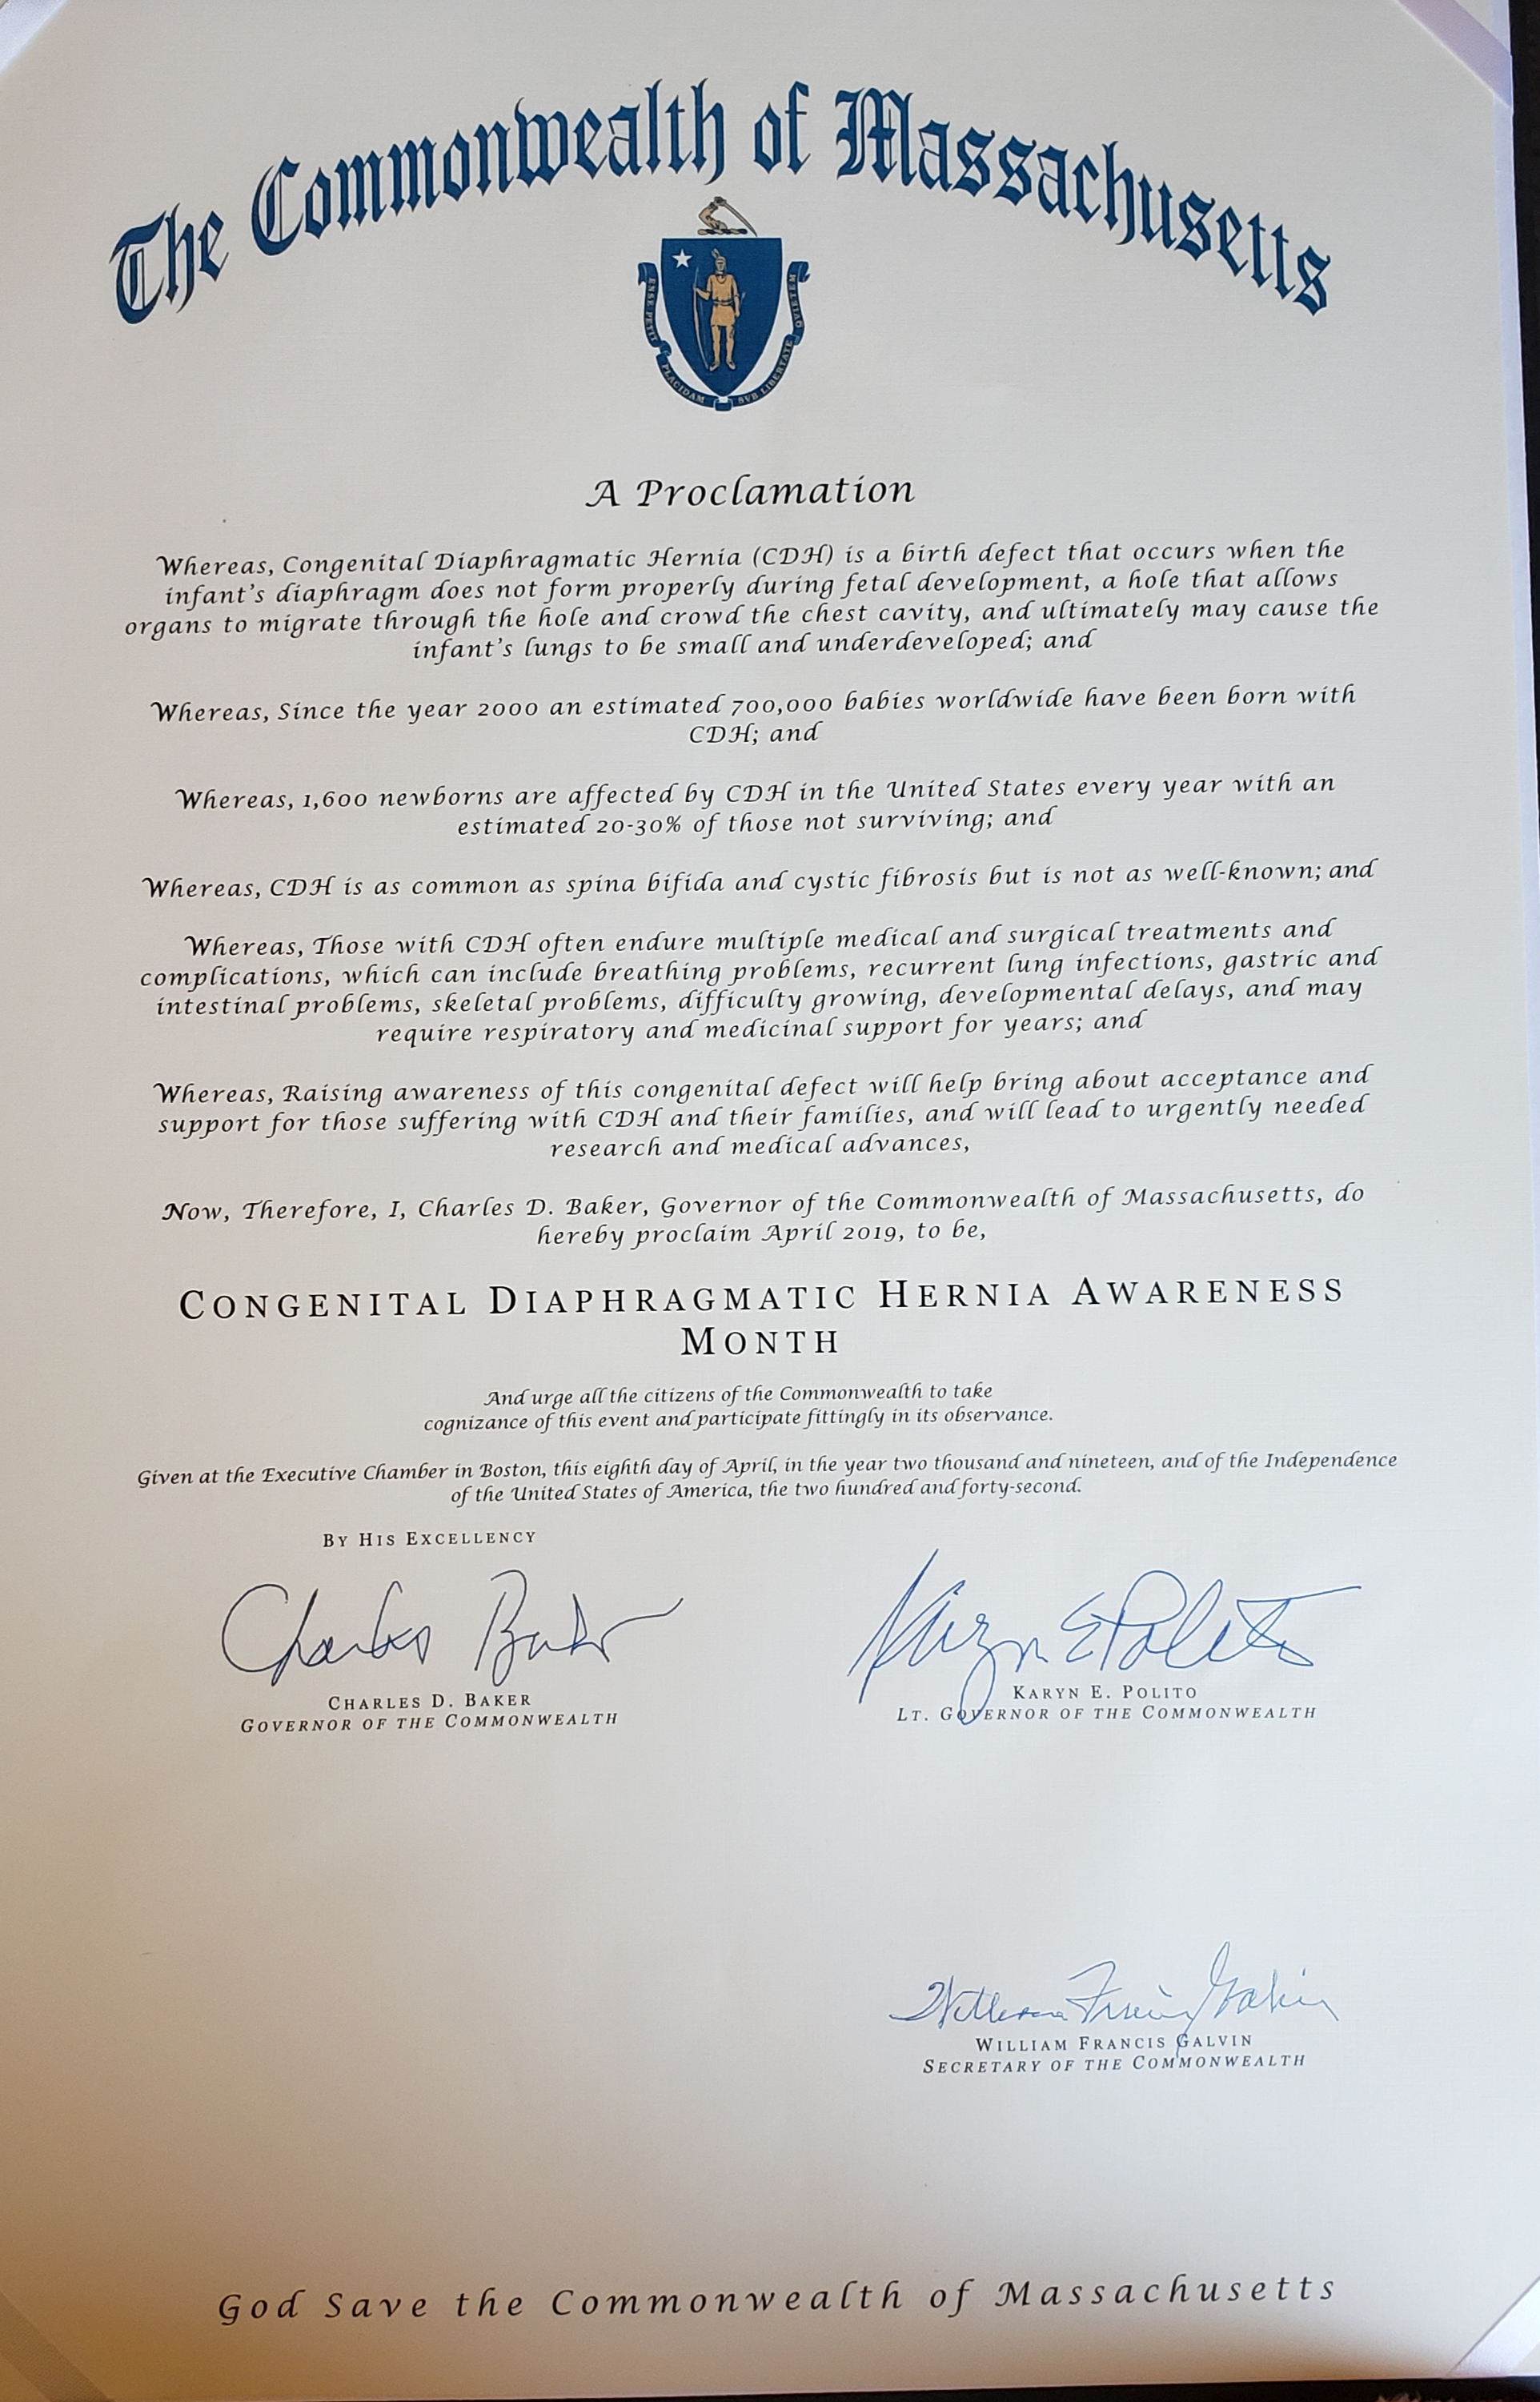 Oregon Proclaims April 2019 CDH Awareness Month